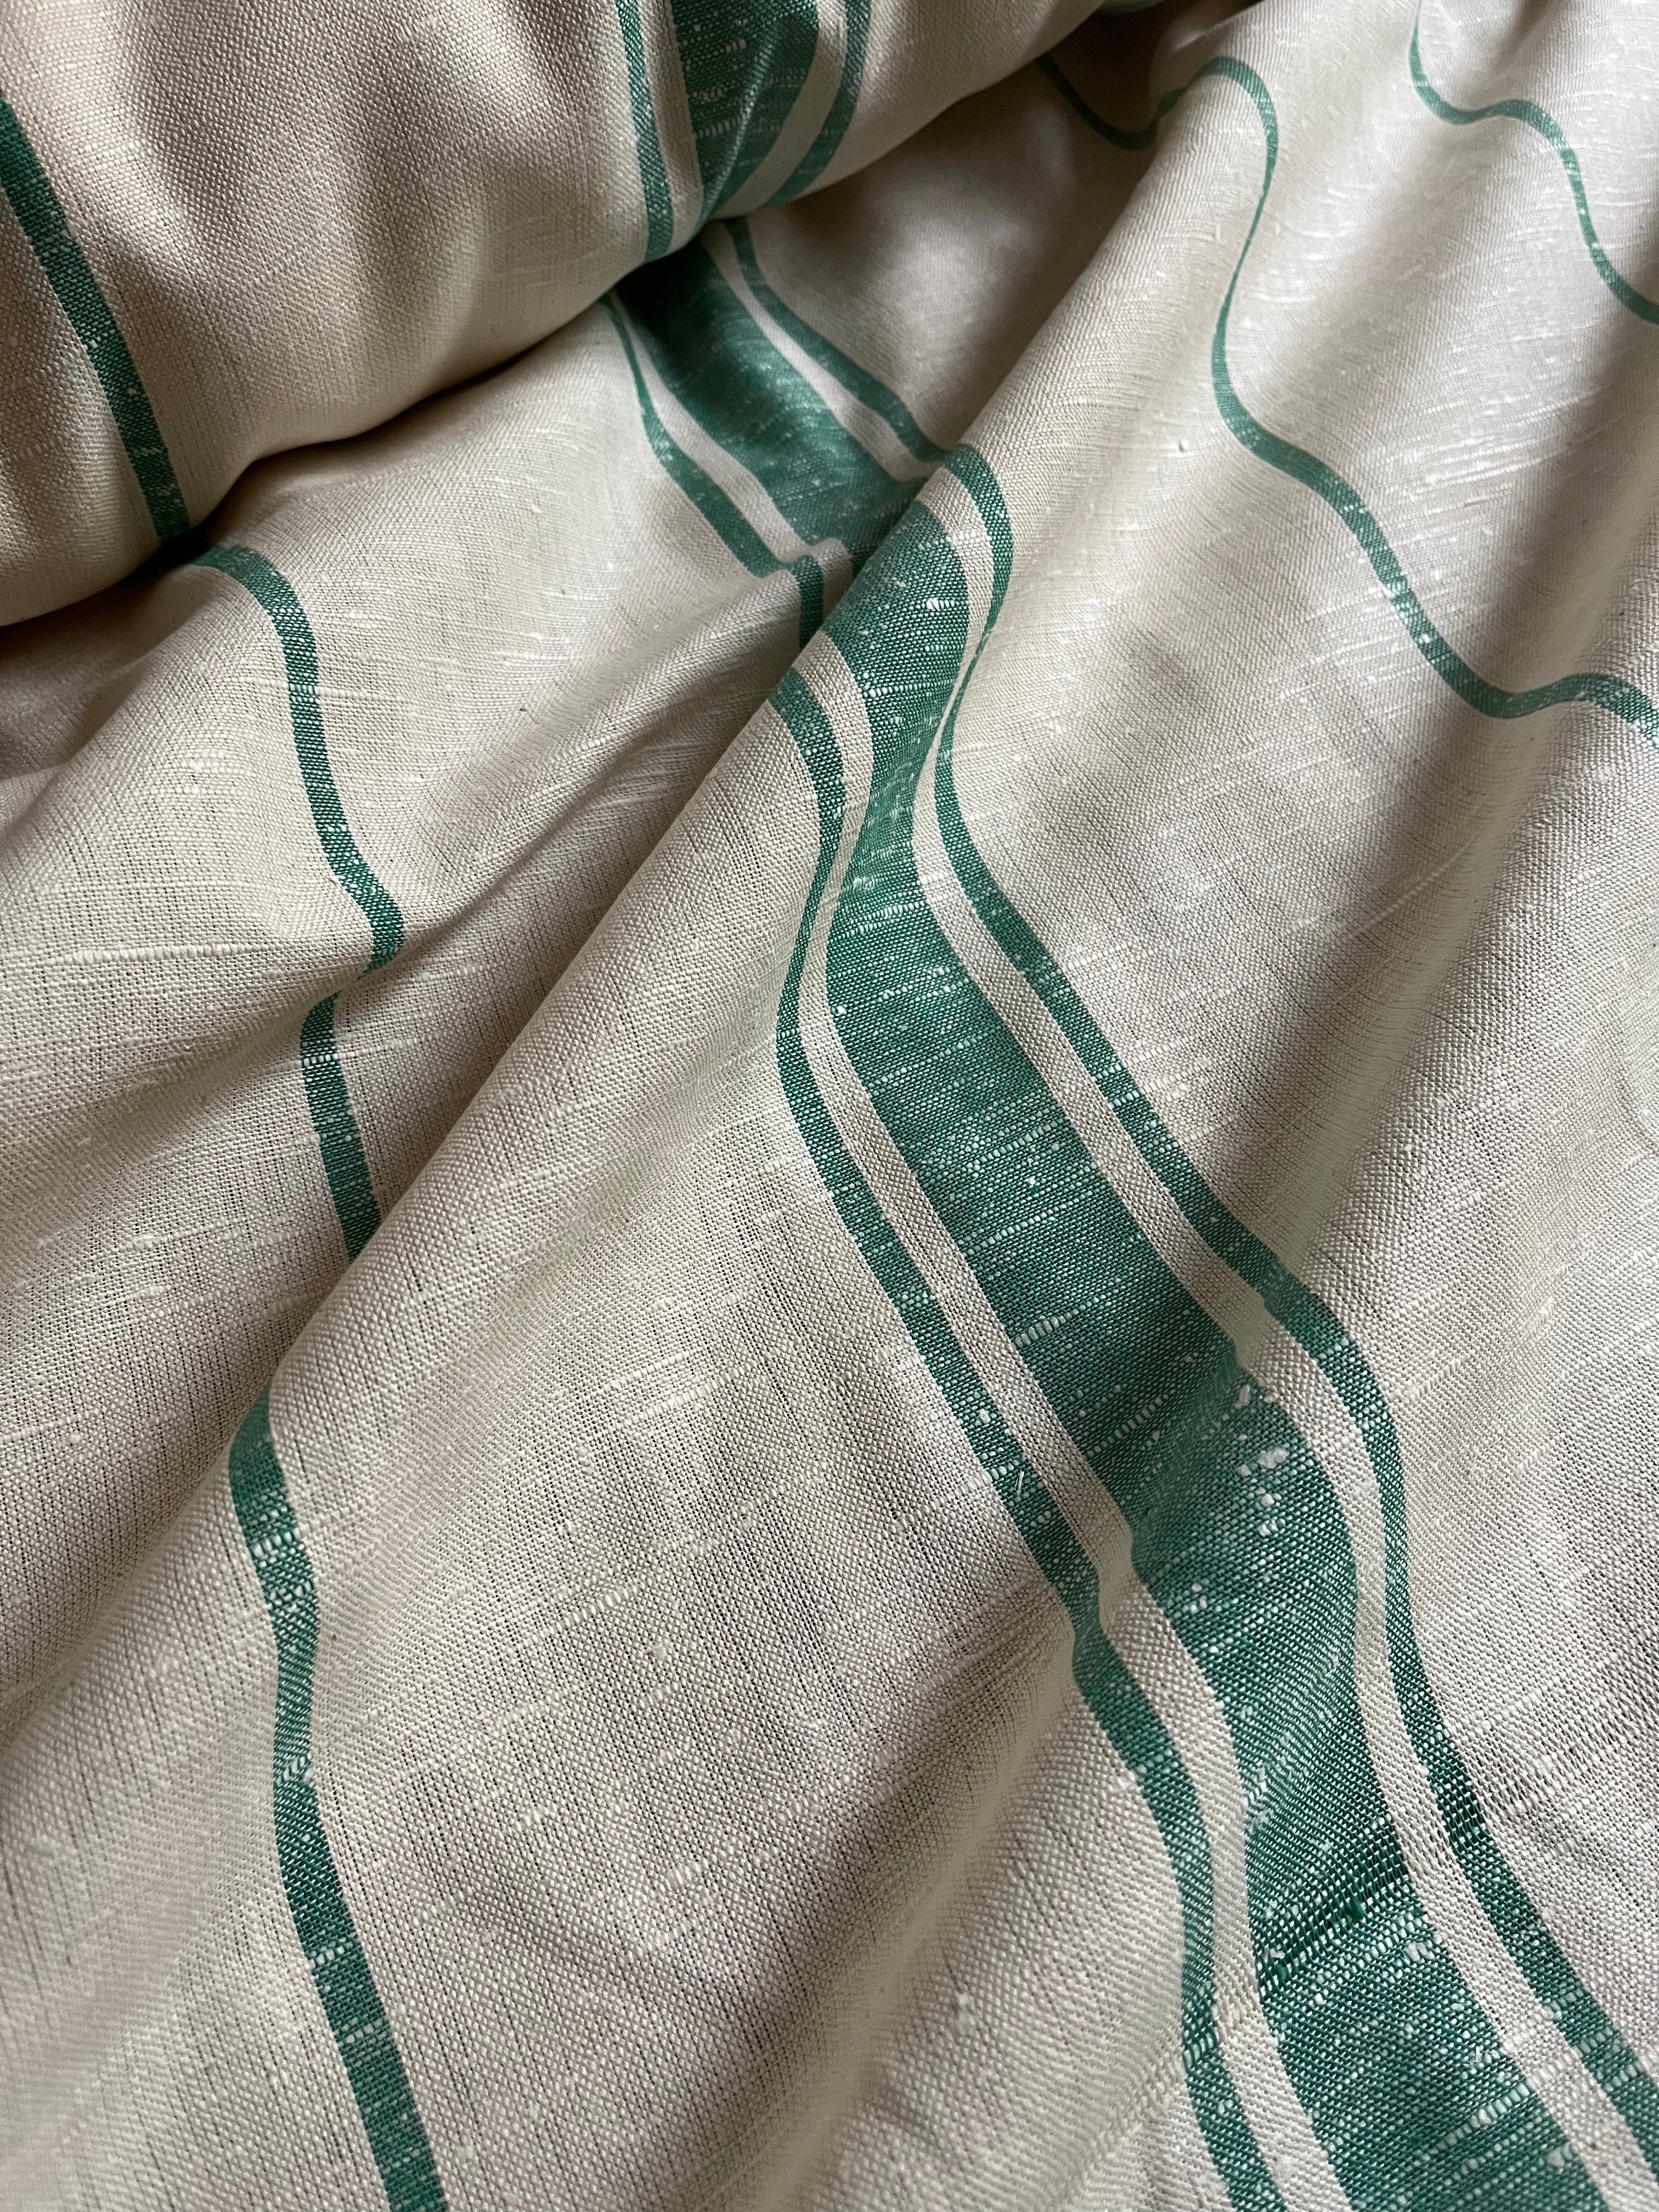 Green Stripes - 3 x 1,5 Meter extra breites Leinen mit Streifen